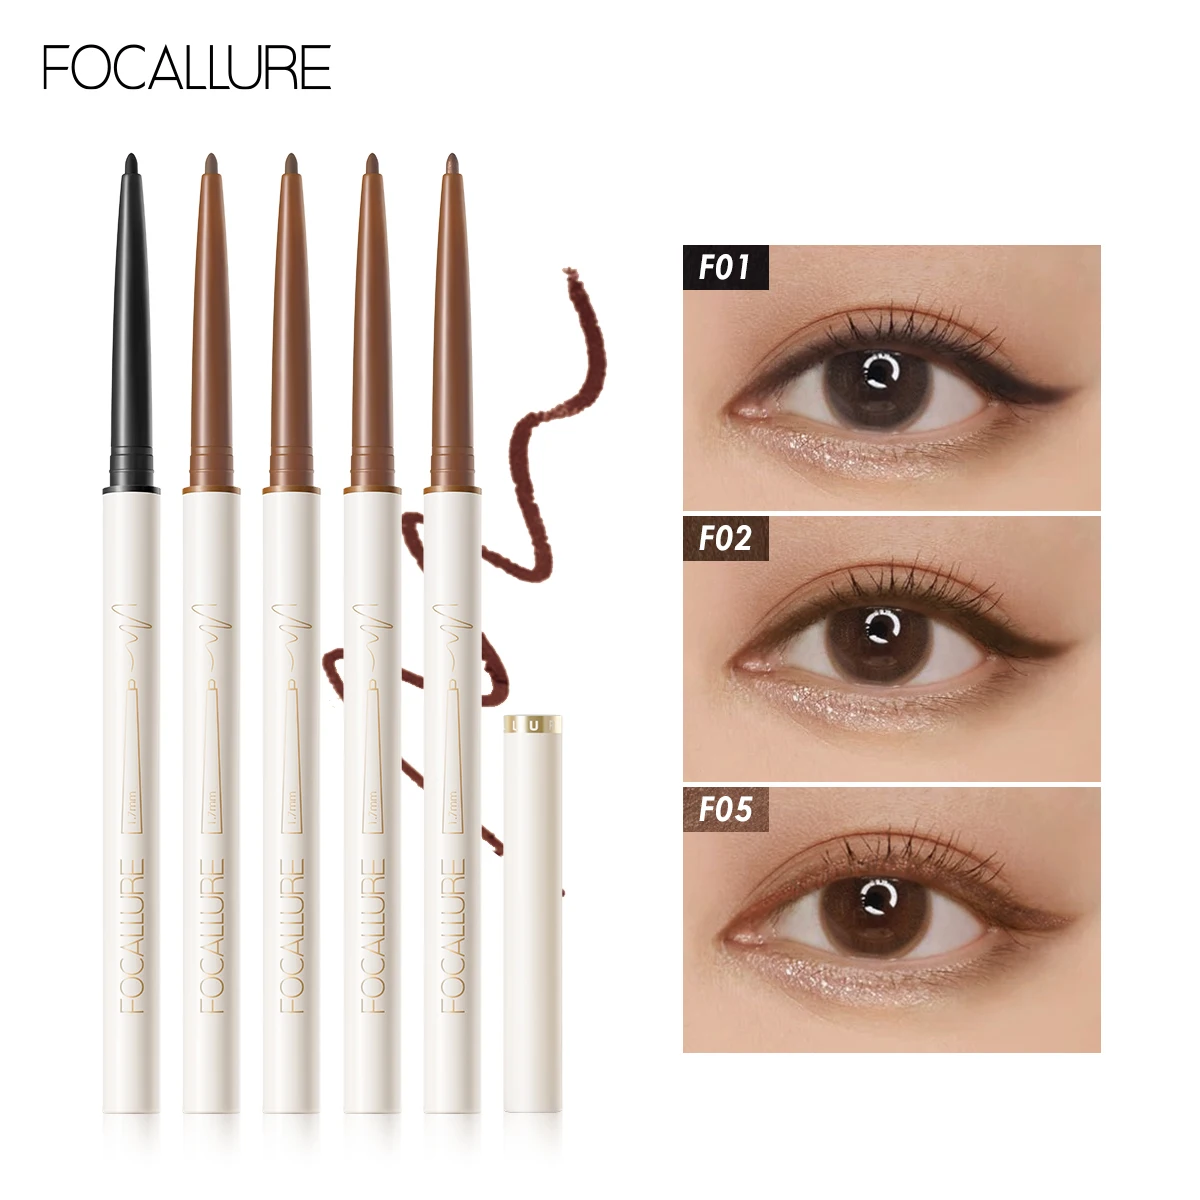 

Focallure Professional Ultimate Black Liquid Eyeliner Long-lasting Waterproof Quick-dry Eye Liner Pencil Pen Makeup Beauty Tools